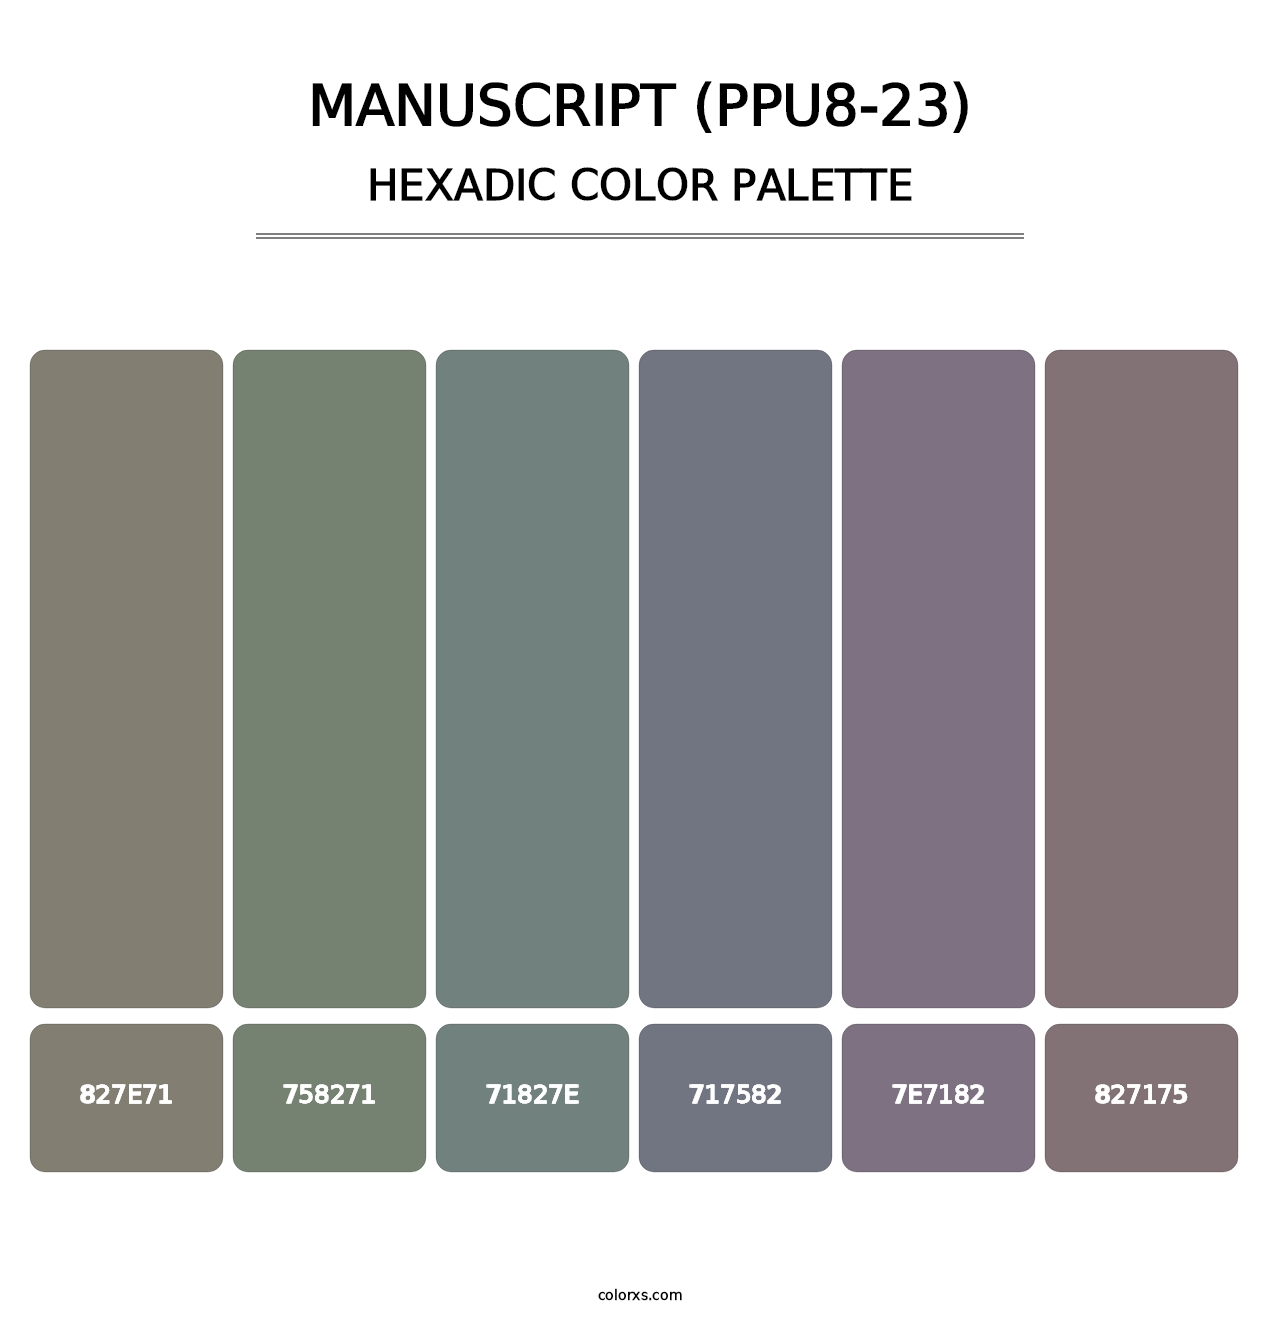 Manuscript (PPU8-23) - Hexadic Color Palette